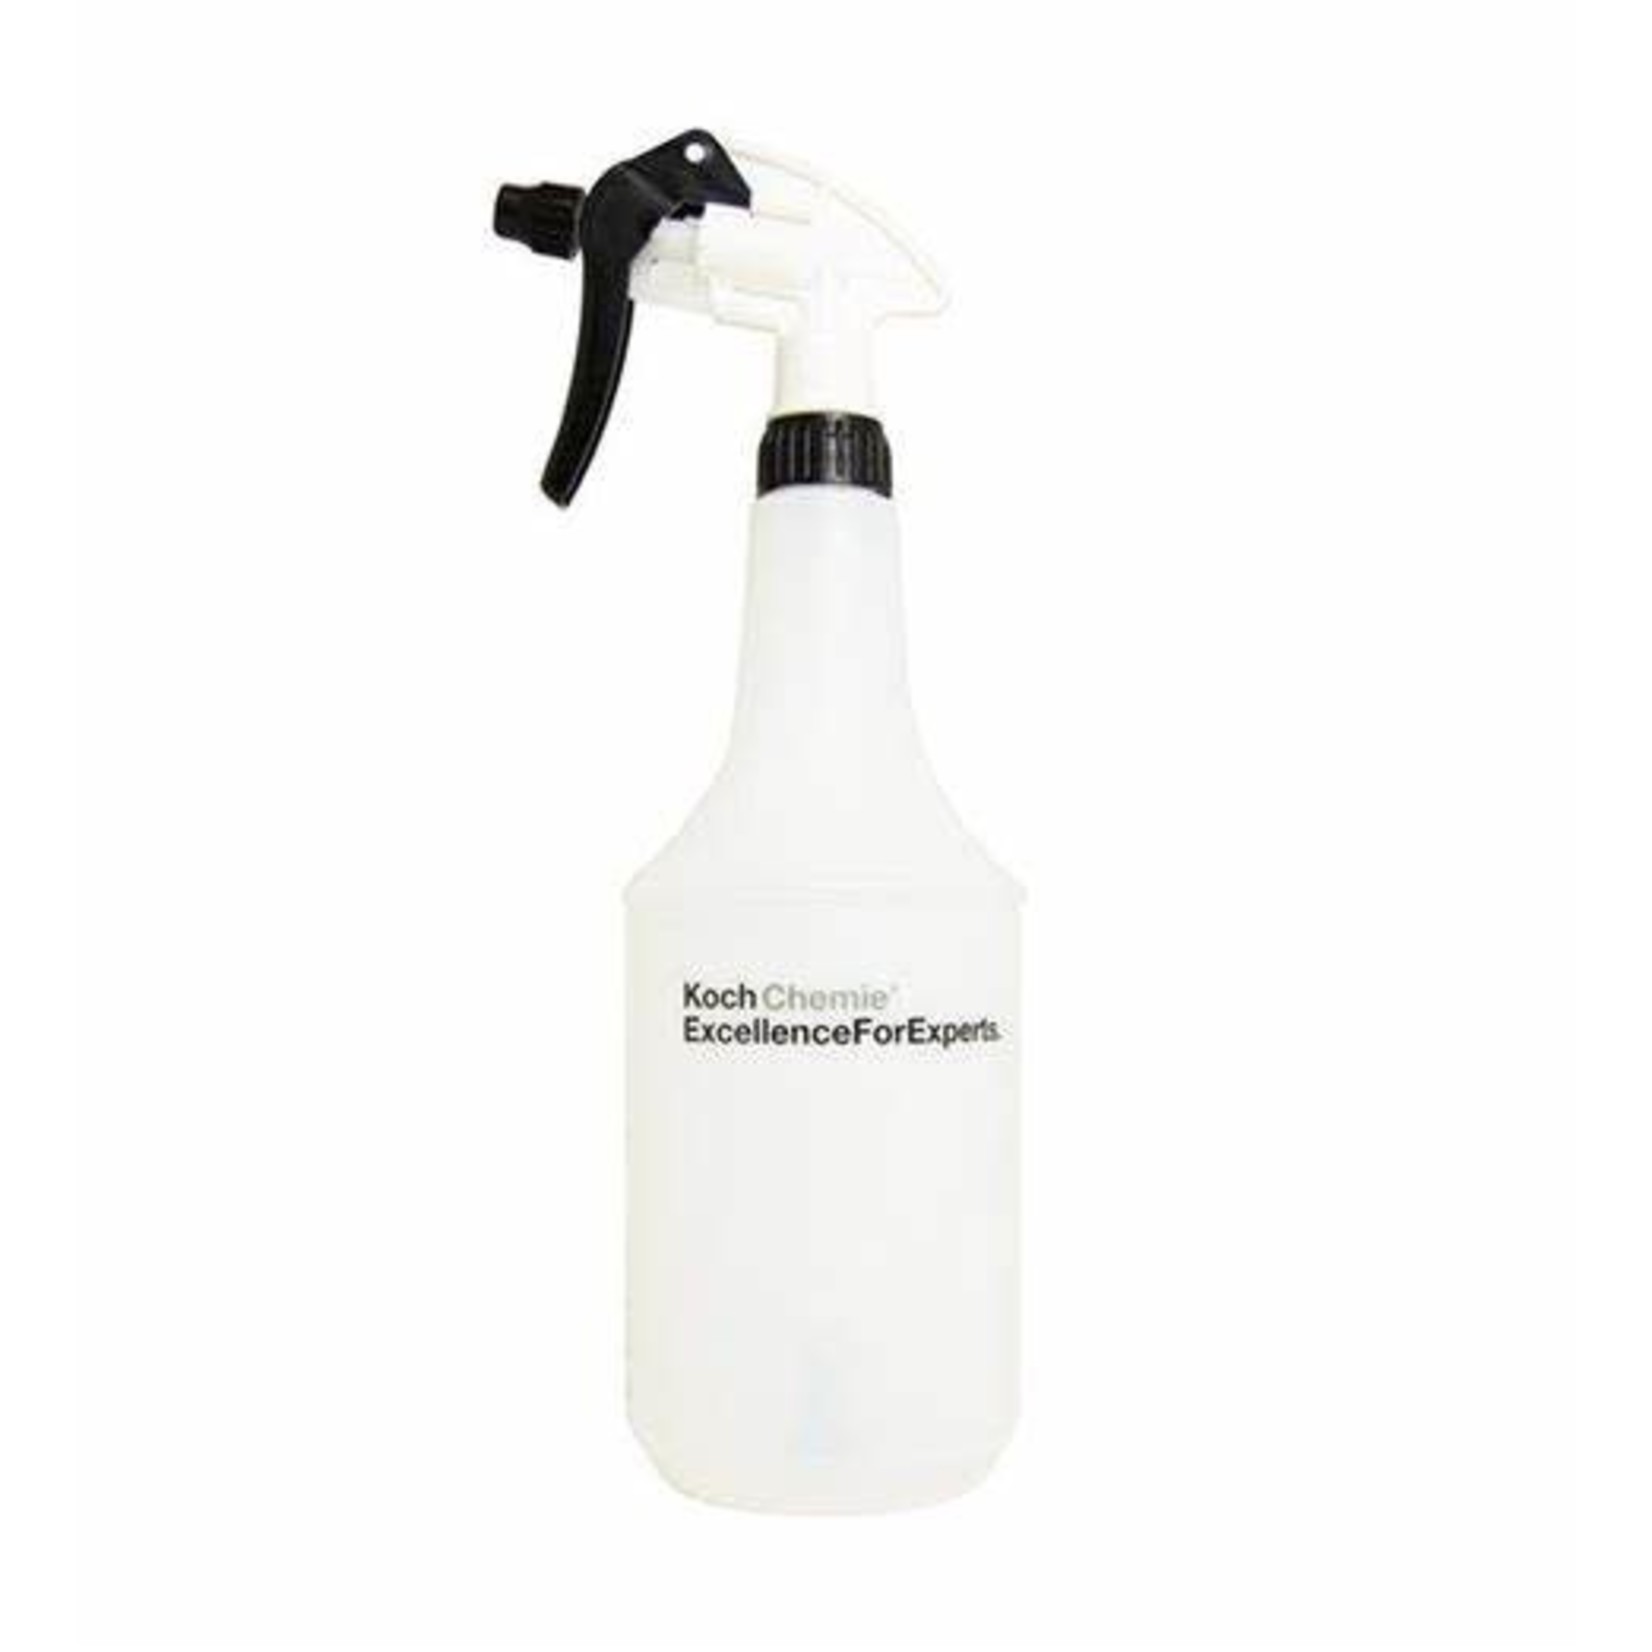 Koch Chemie KochChemie - Spray Bottle